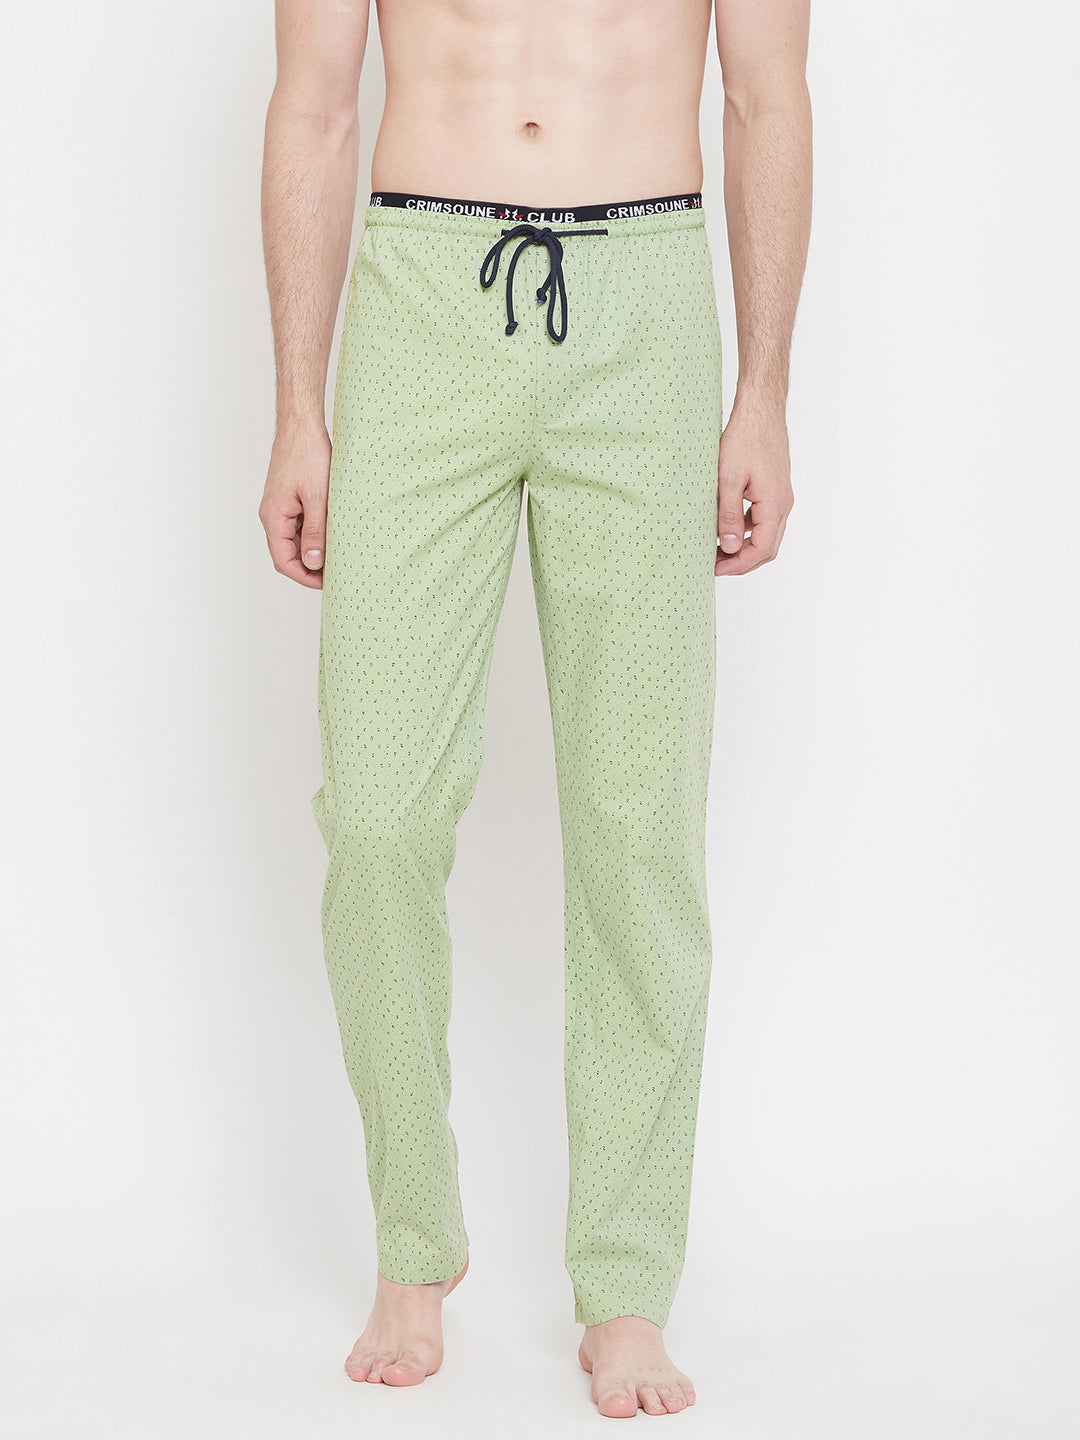 Green Printed Lounge Pants - Men Lounge Pants